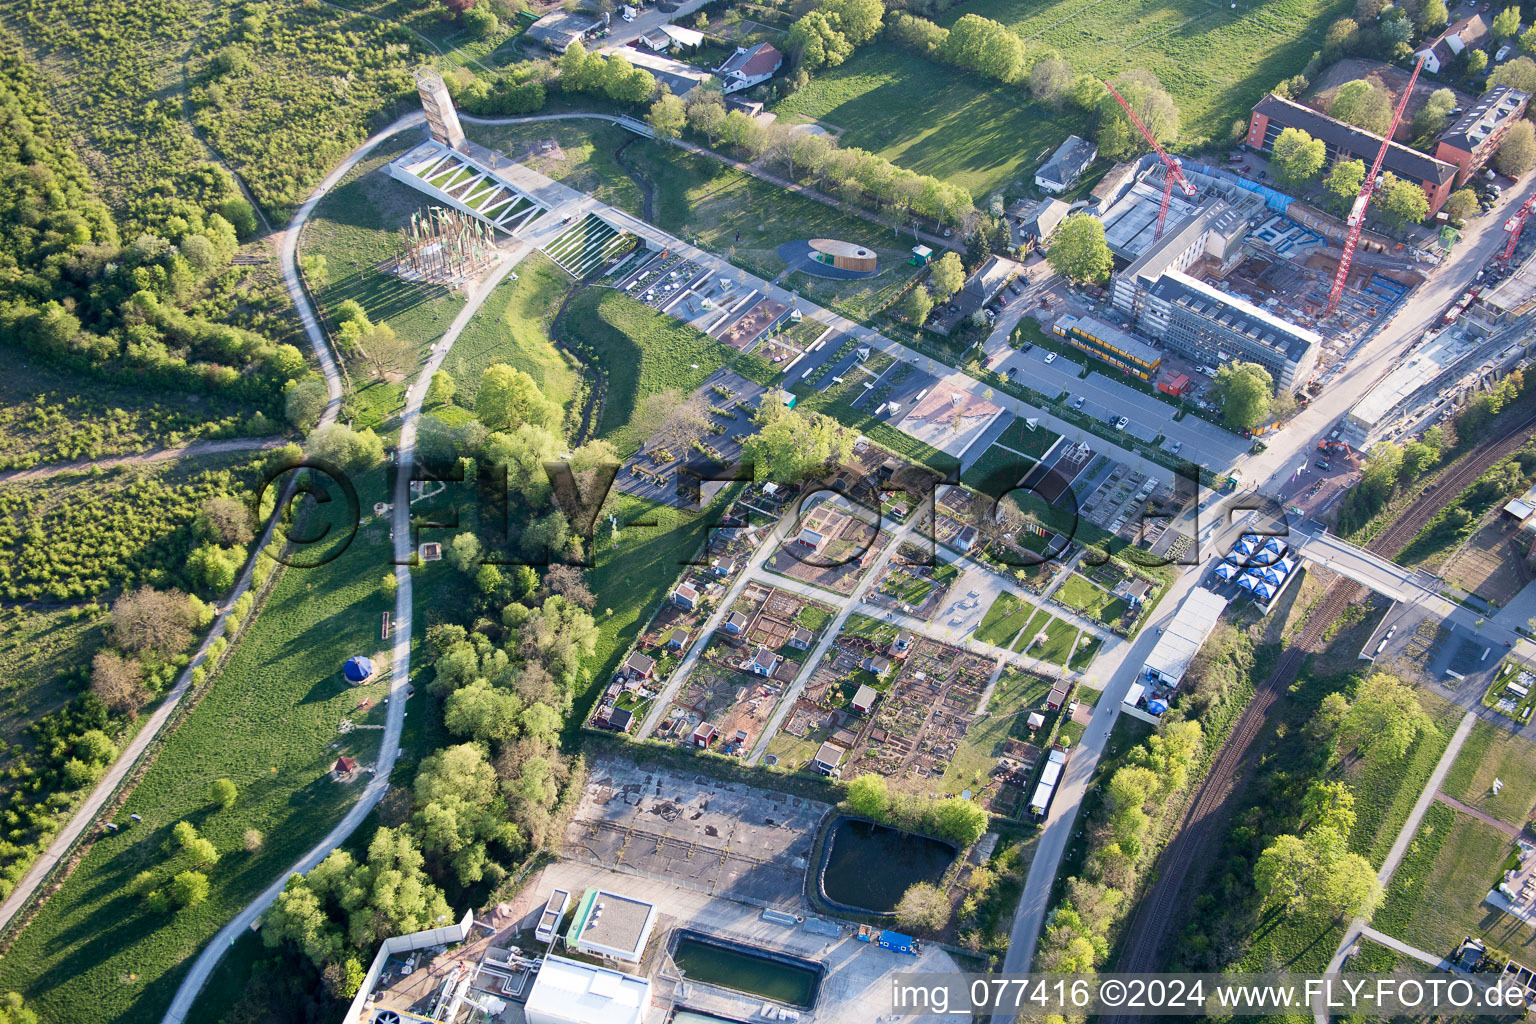 State Garden Show 2015 in Landau in der Pfalz in the state Rhineland-Palatinate, Germany